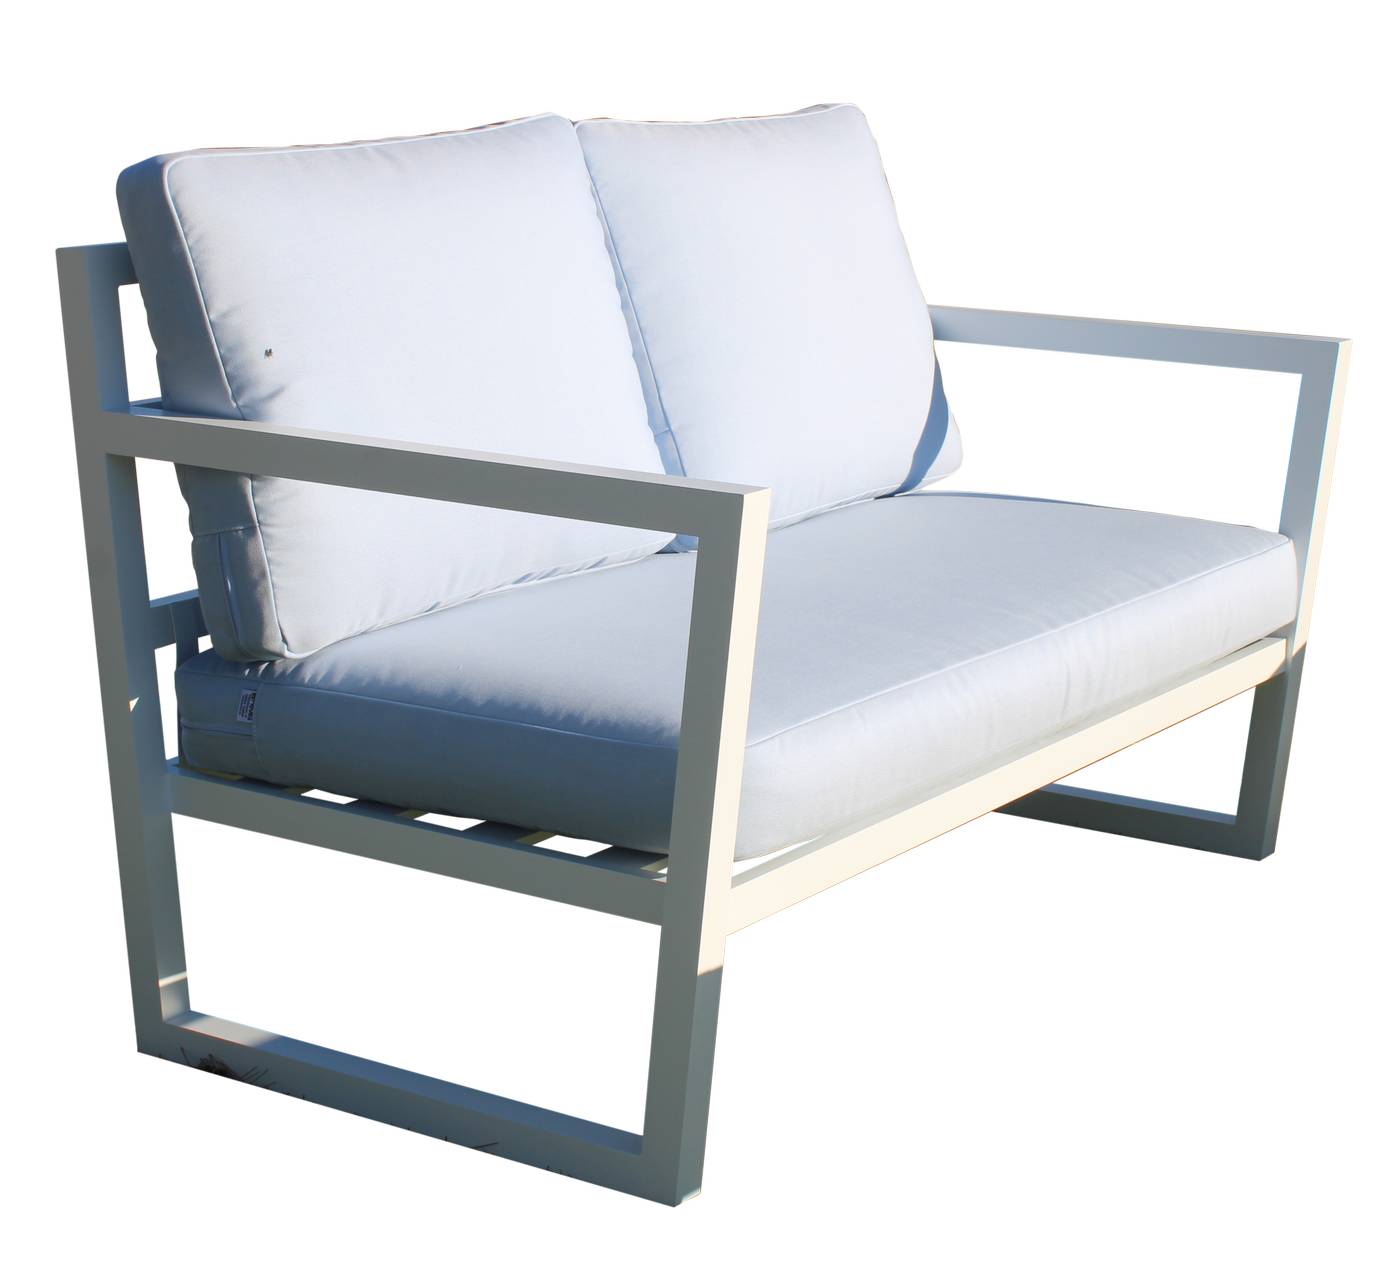 Sofá 2p + 2 sillones + mesa de aluminio [Piona] - Conjunto de aluminio para exterior: sofá 2 plazas + 2 sillones + mesa de centro. Disponible en cinco colores diferentes.